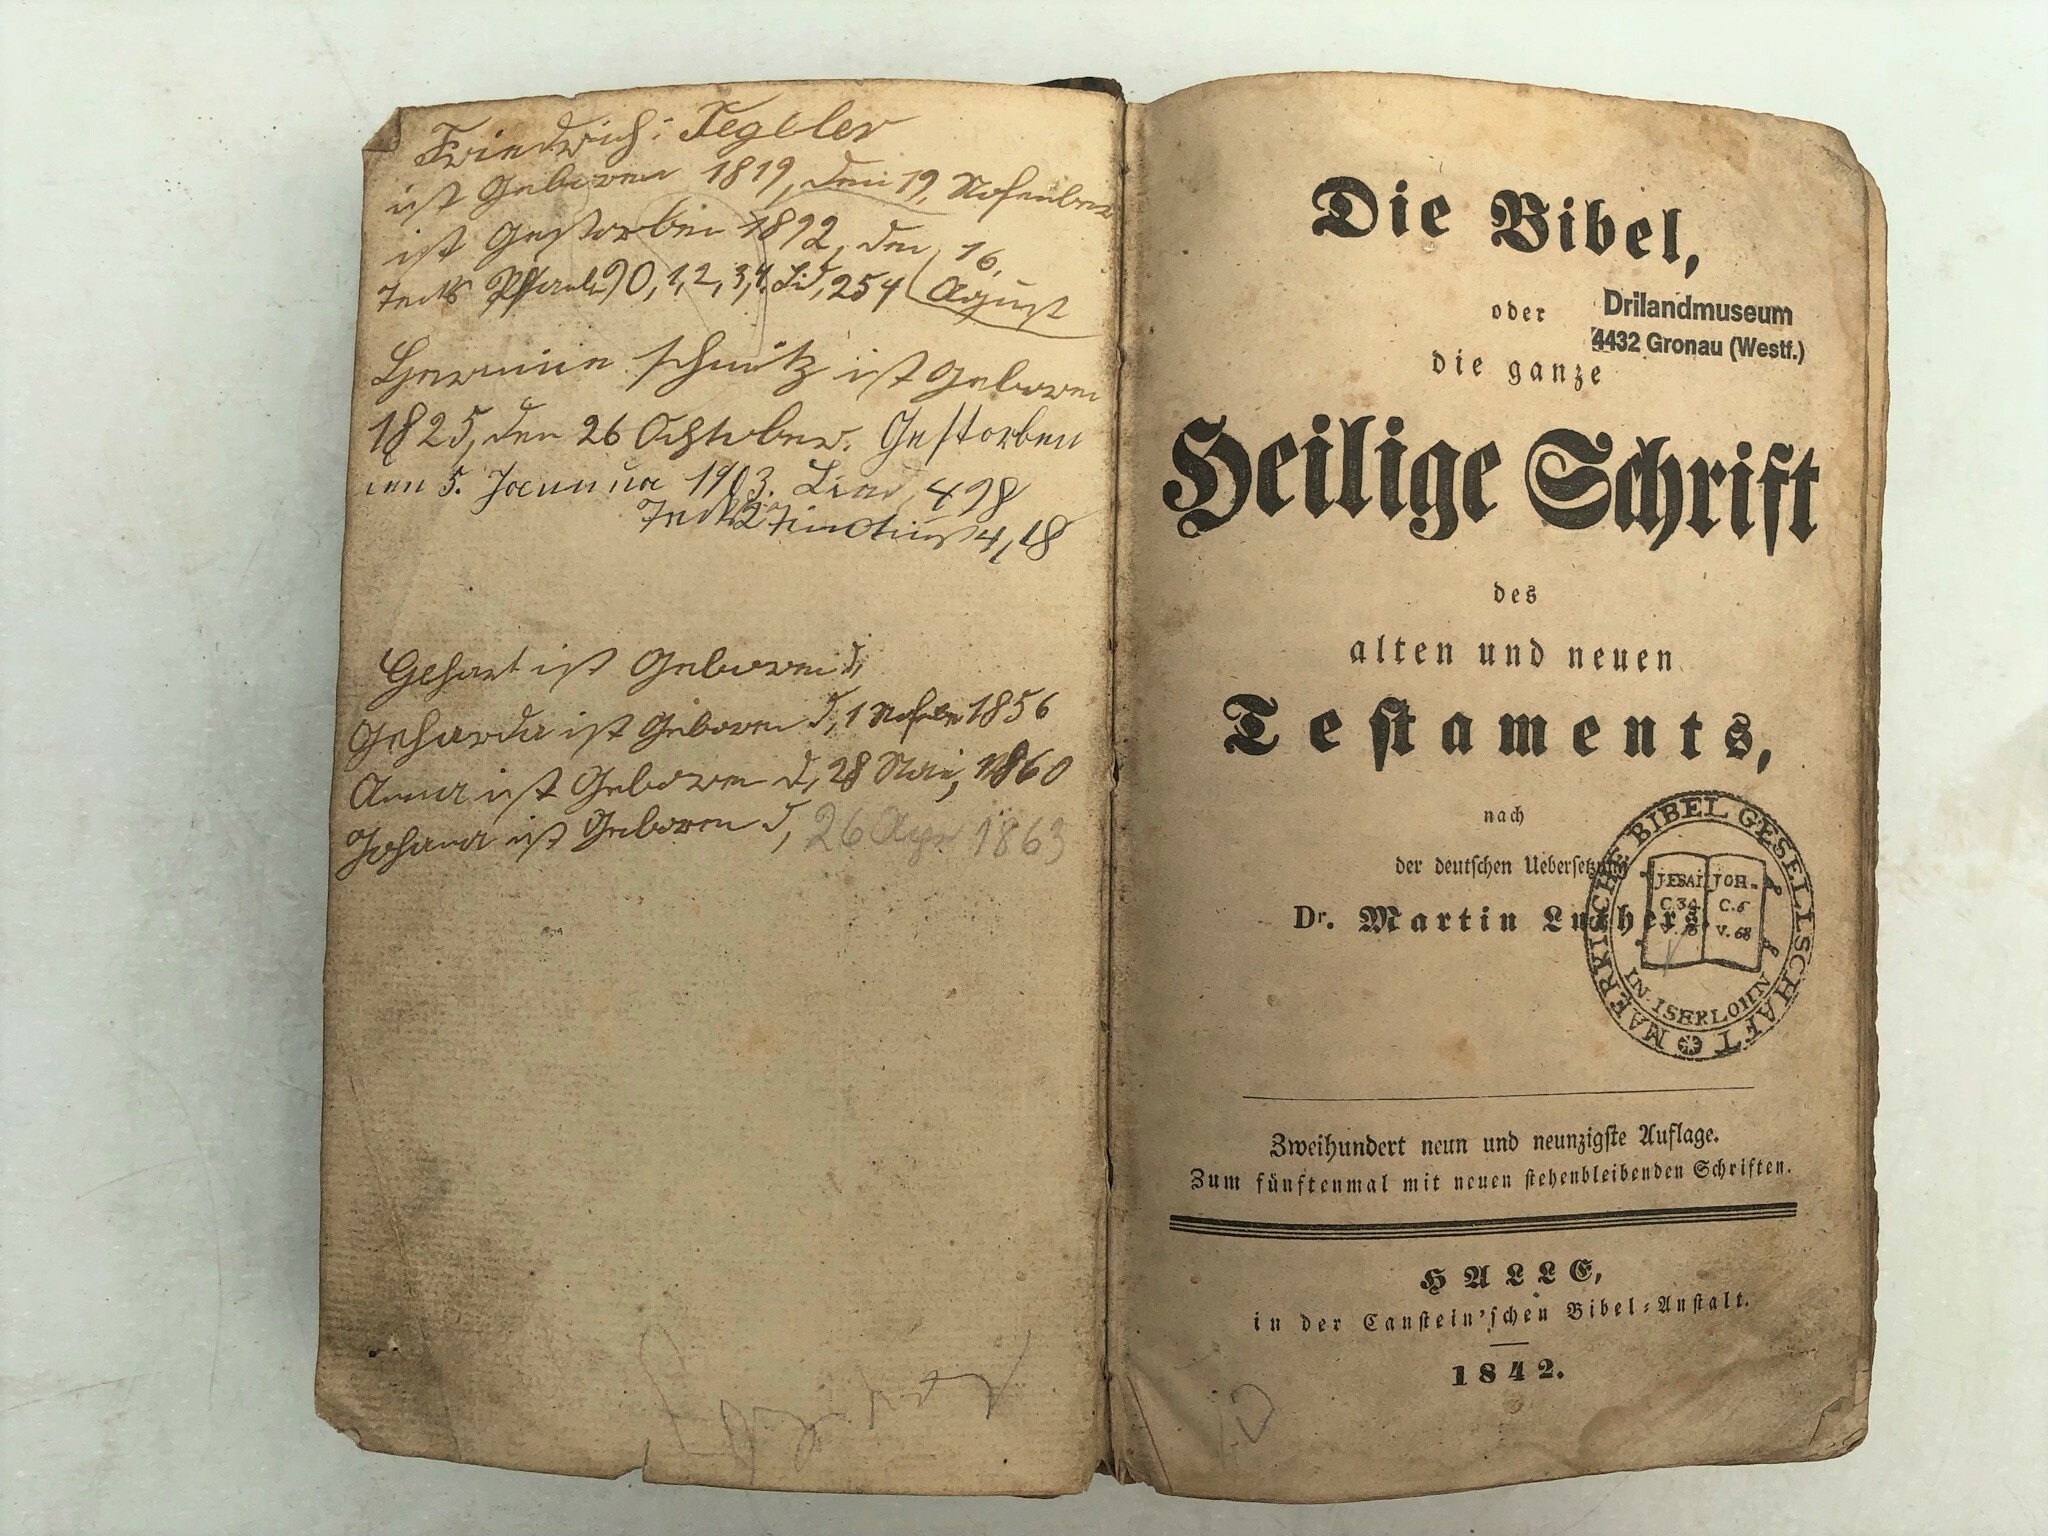 Bibel (Lutherübersetzung) von 1842 (Drlandmusem Gronau CC BY-NC-SA)